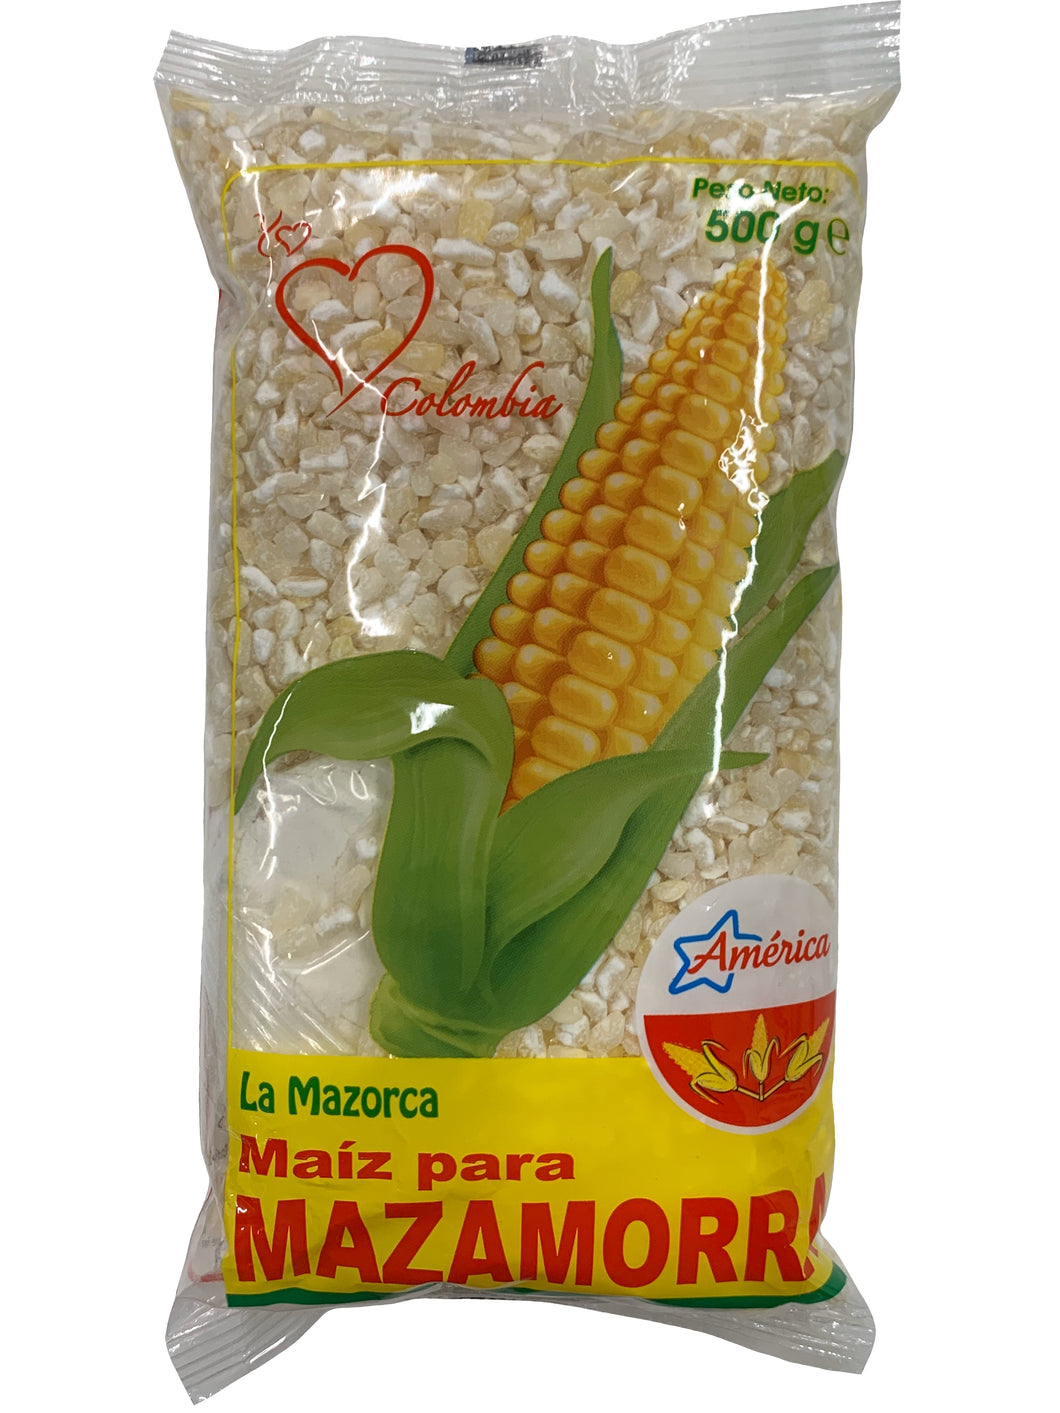 America White Corn Maize - Maiz Blanco Para Mazamorra 500g